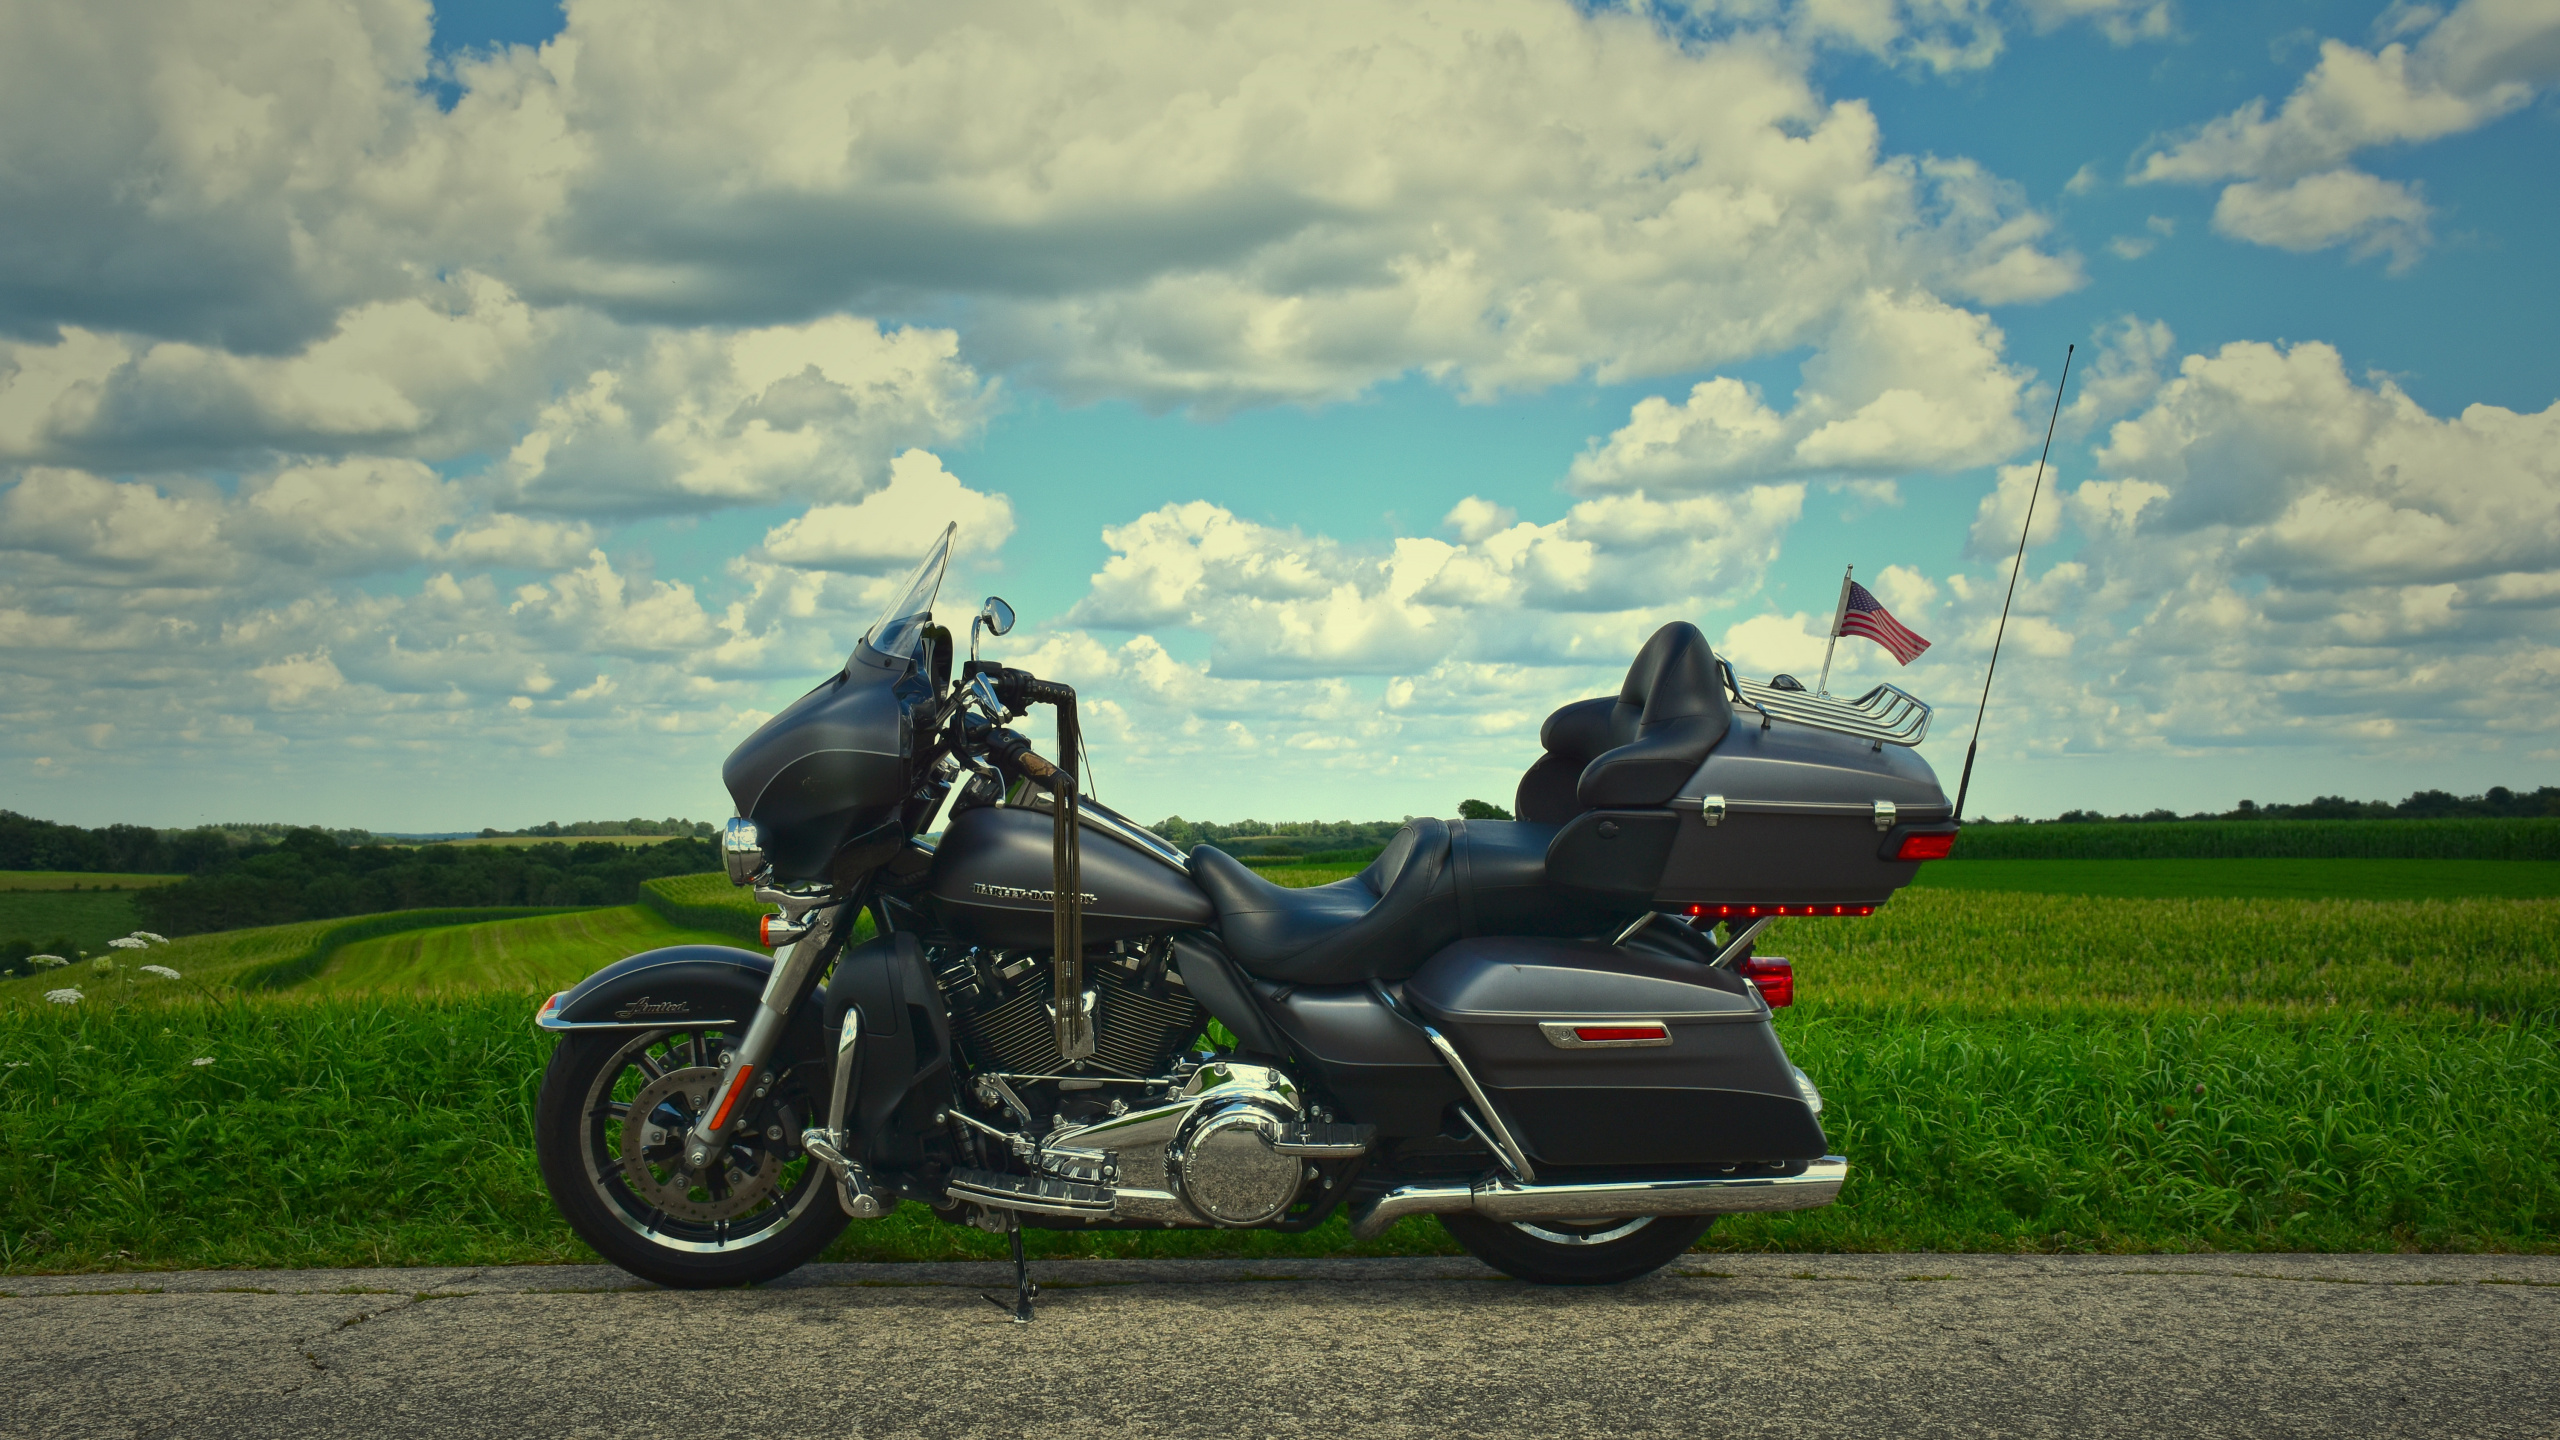 Обои мотоцикл, облако, аксессуары для мотоциклов, мотоспорт, дорога в разрешении 2560x1440